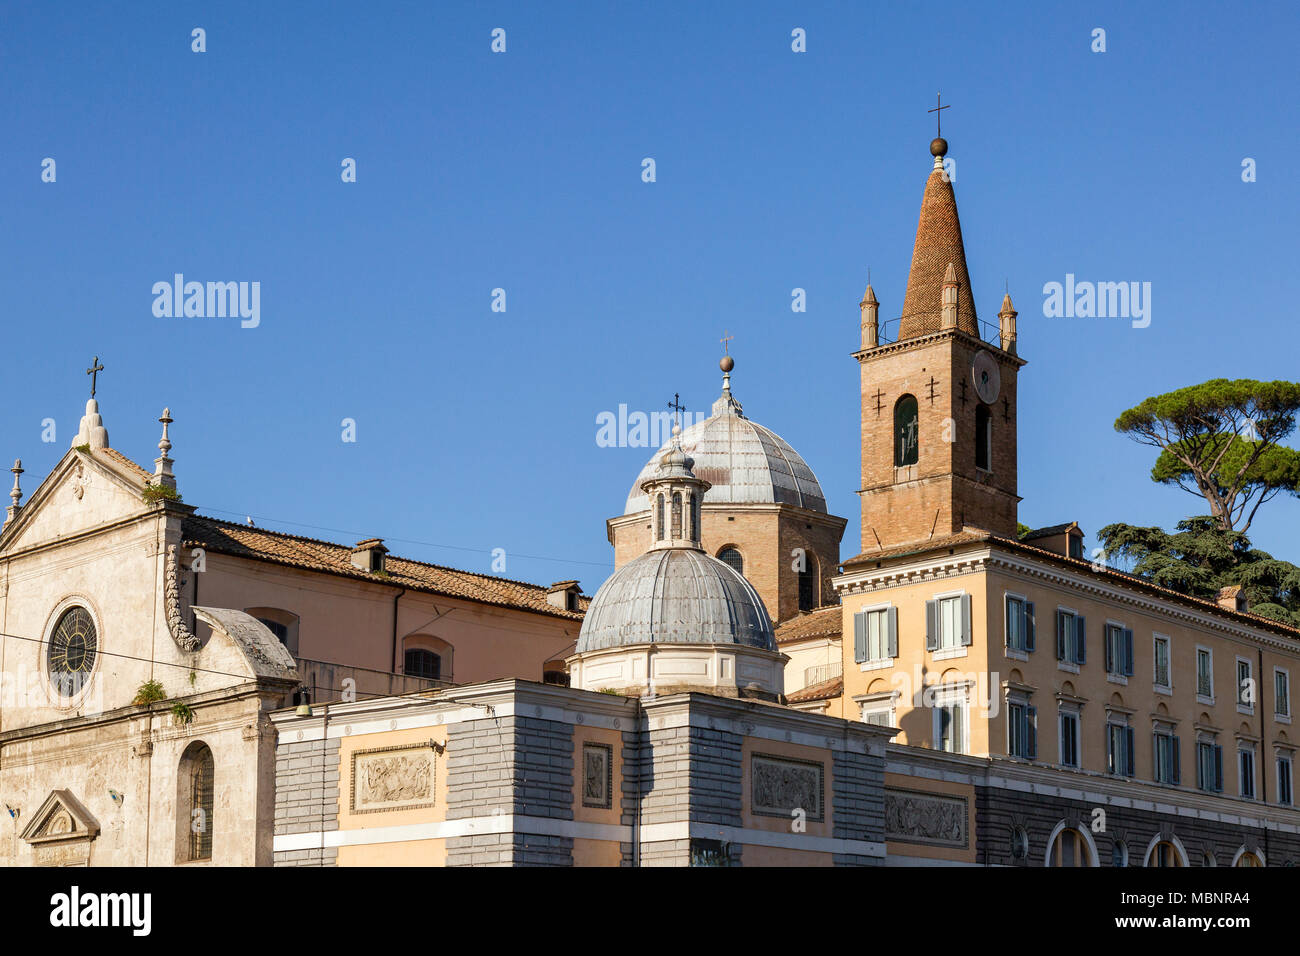 Die Pfarrei Basilika Santa Maria del Popolo an der Piazza del Popolo, Rom, Italien. Es steht auf der nördlichen Seite der Piazza del Popolo und enthält Werke b Stockfoto